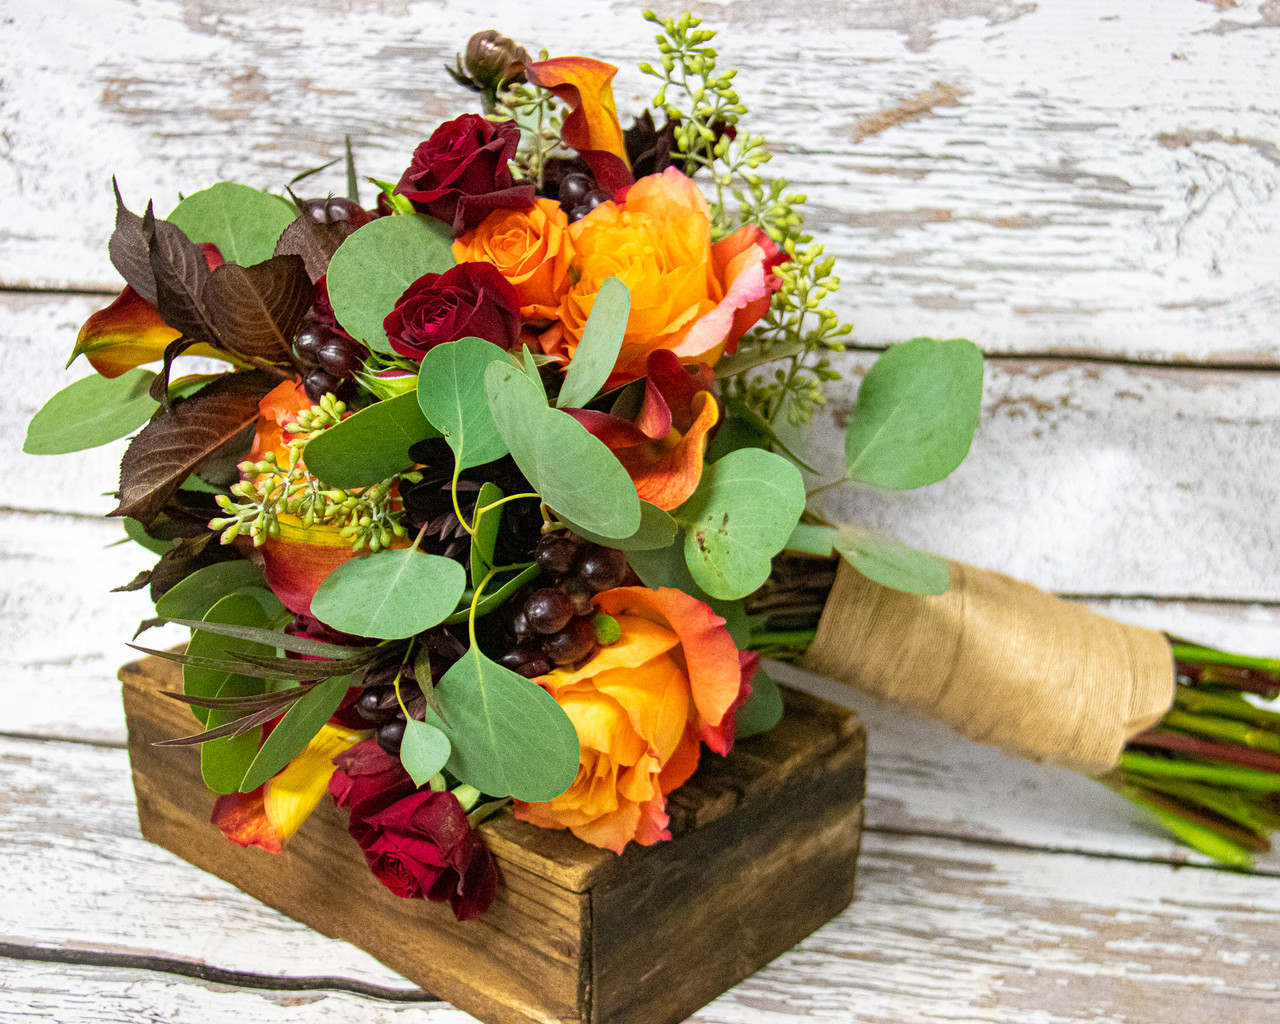 How to Preserve Flowers & Wedding Bouquet: 8 Methods